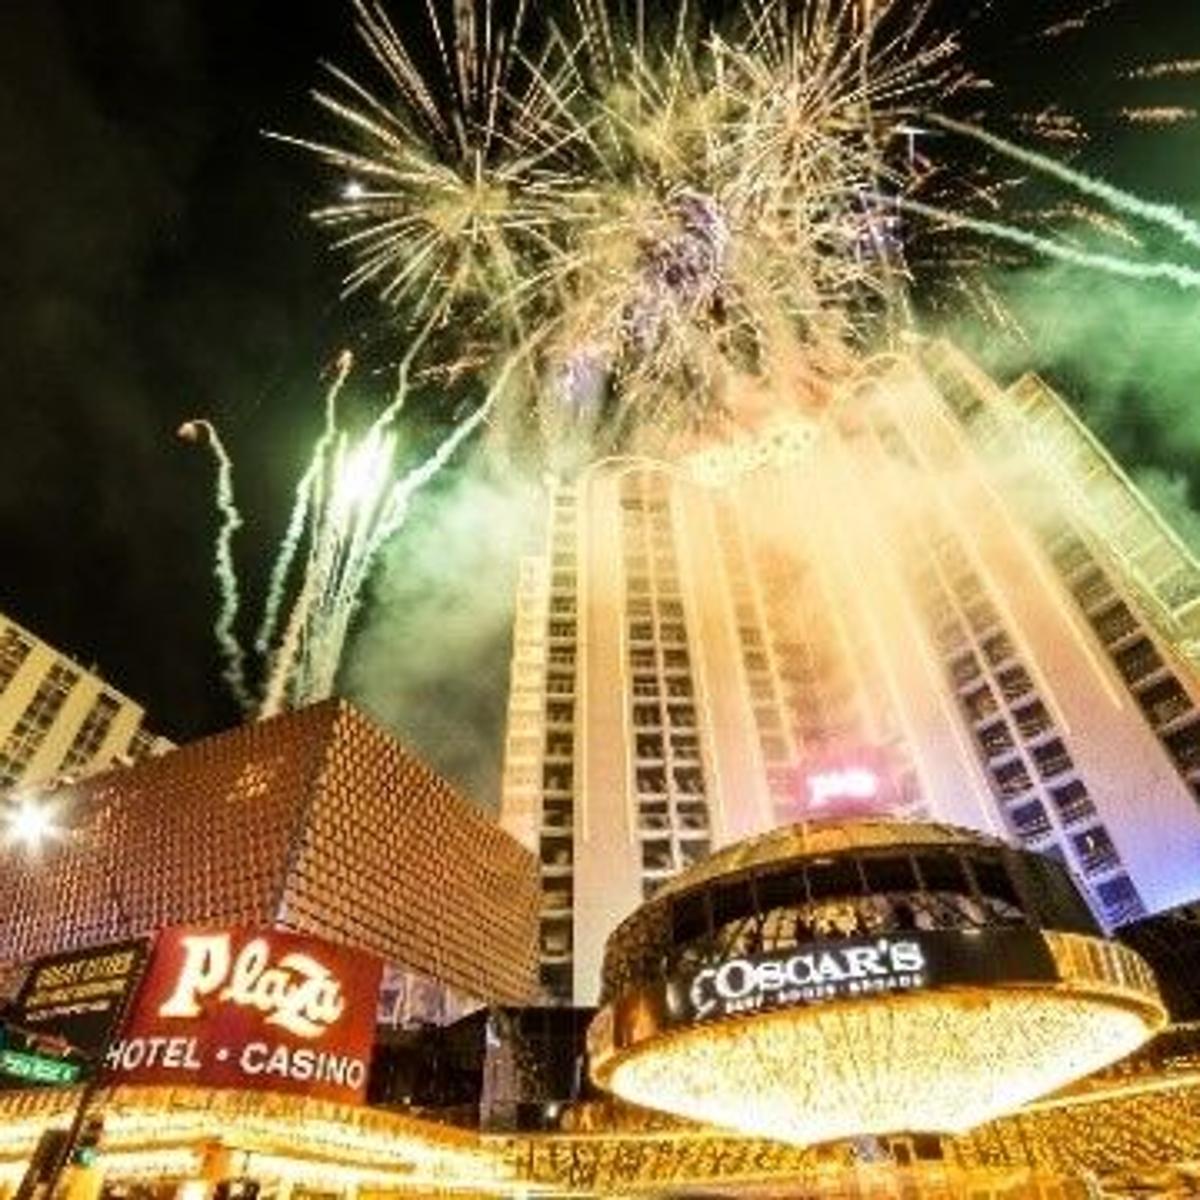 New casinos in las vegas 2021